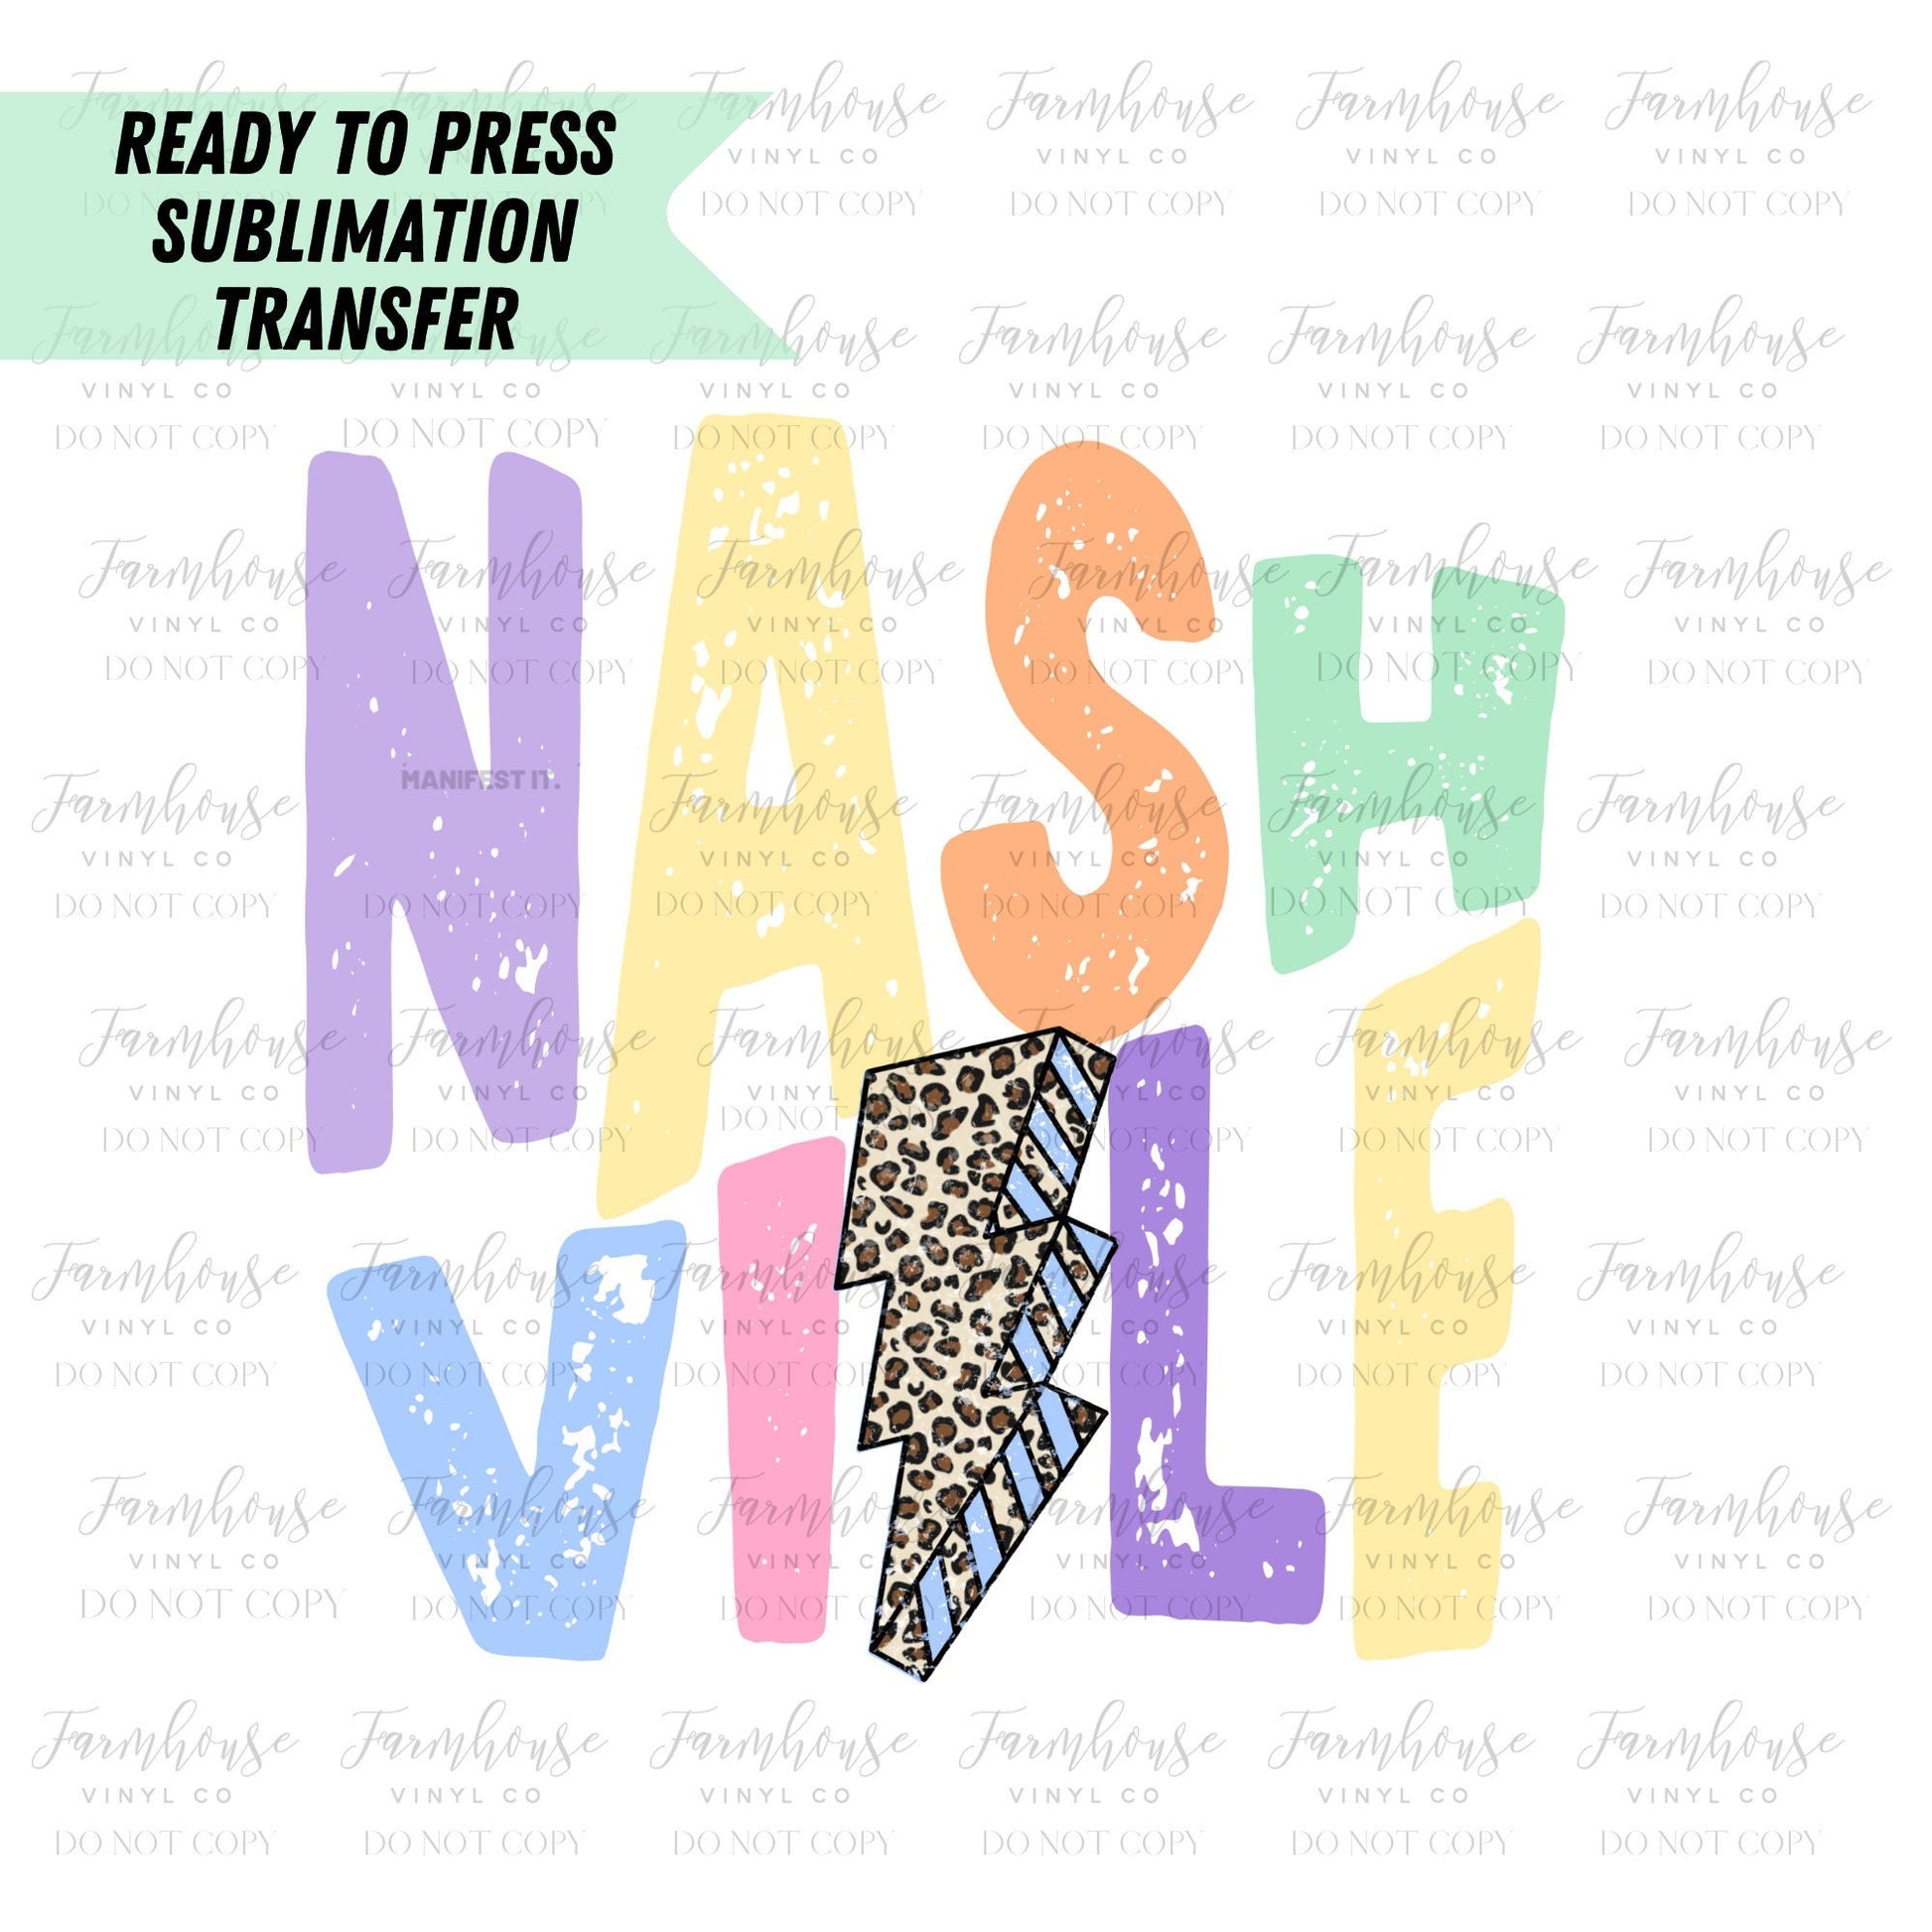 Nashville Leopard Distressed Ready To Press Sublimation Transfer - Farmhouse Vinyl Co